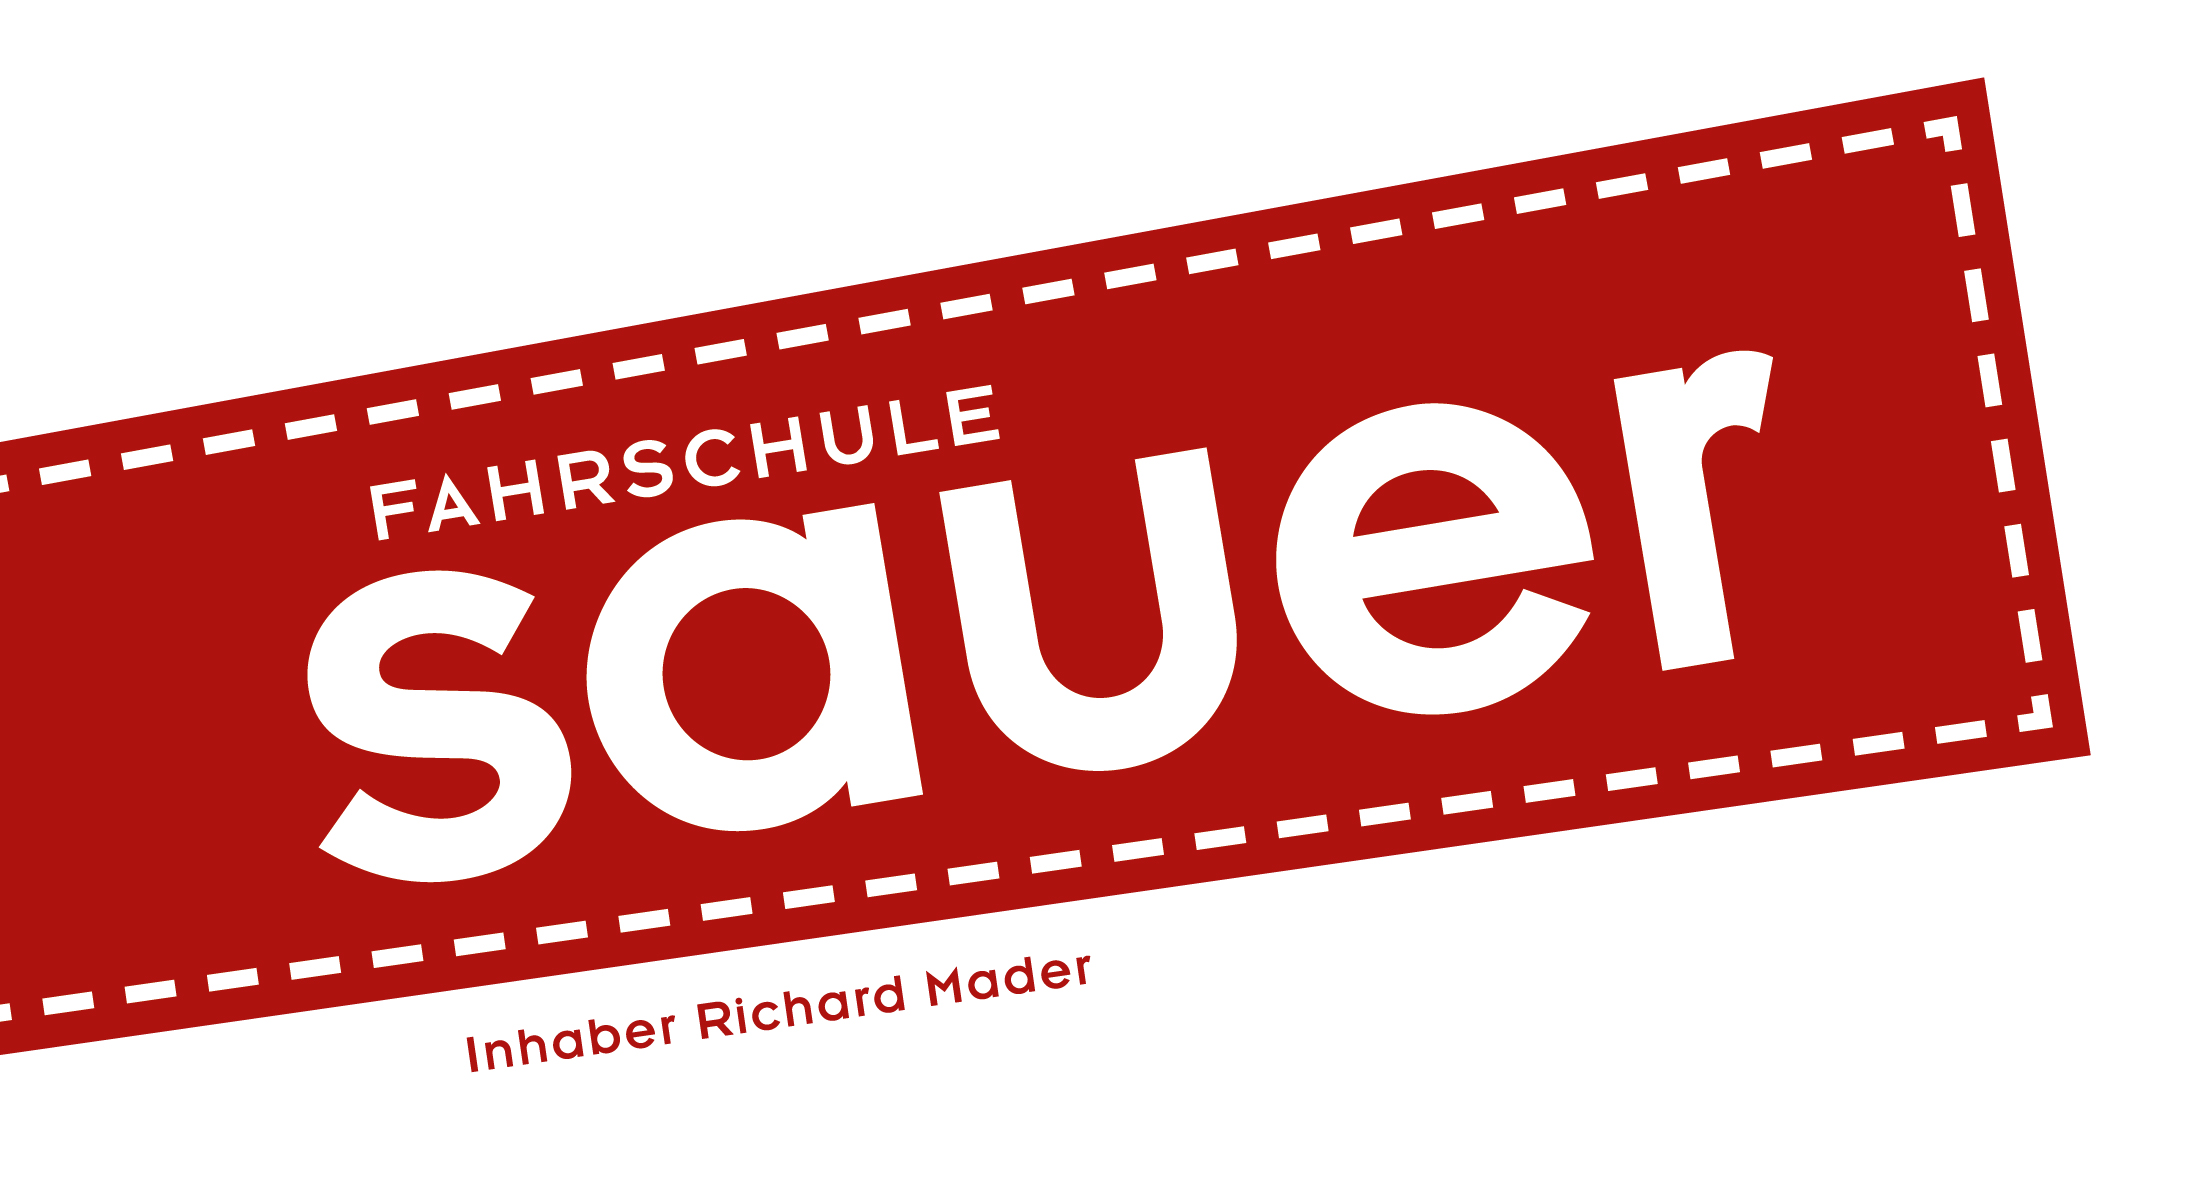 Sauer Logo 4c 2019 rot links abfallend RGB